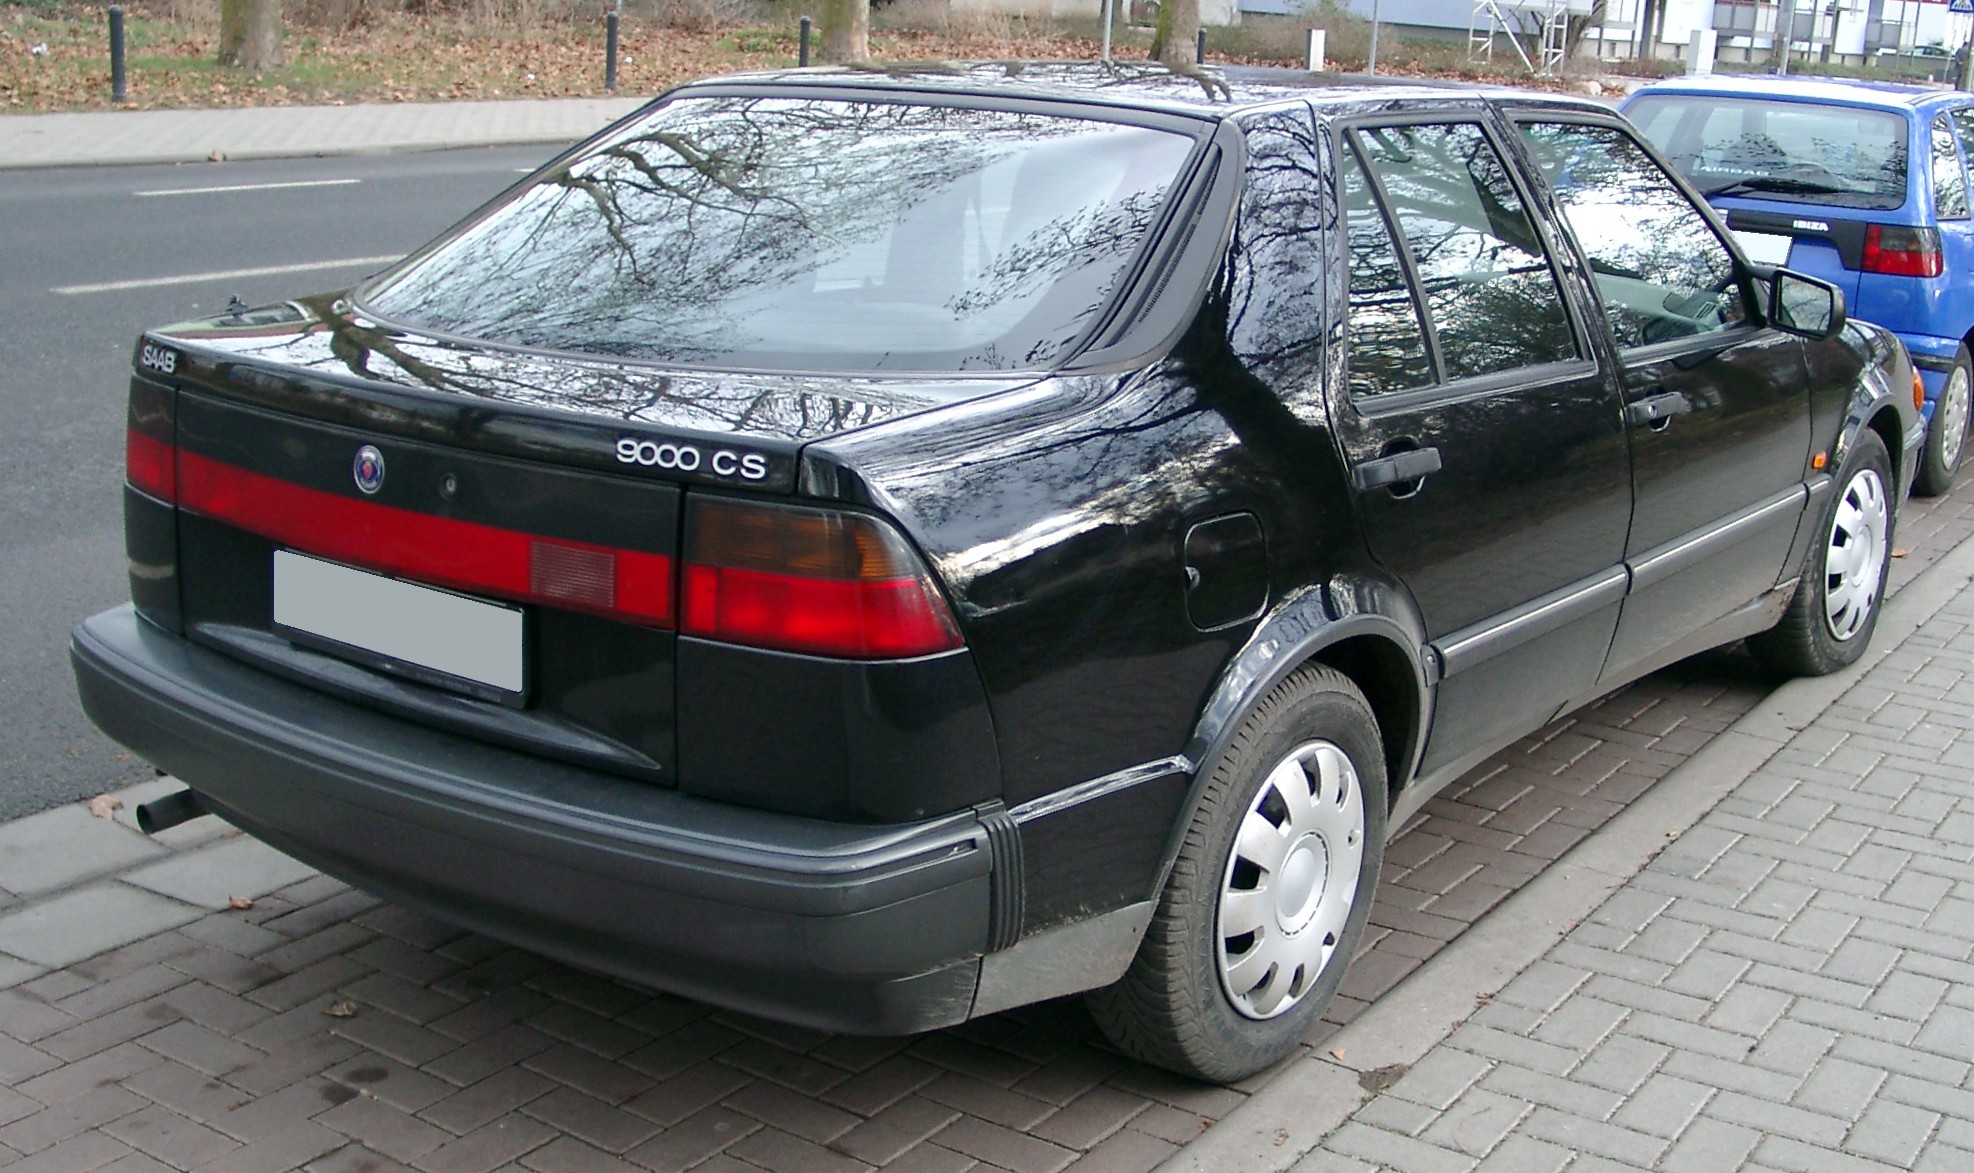 File:Saab 9000 CS rear 20080111.jpg - Wikimedia Commons